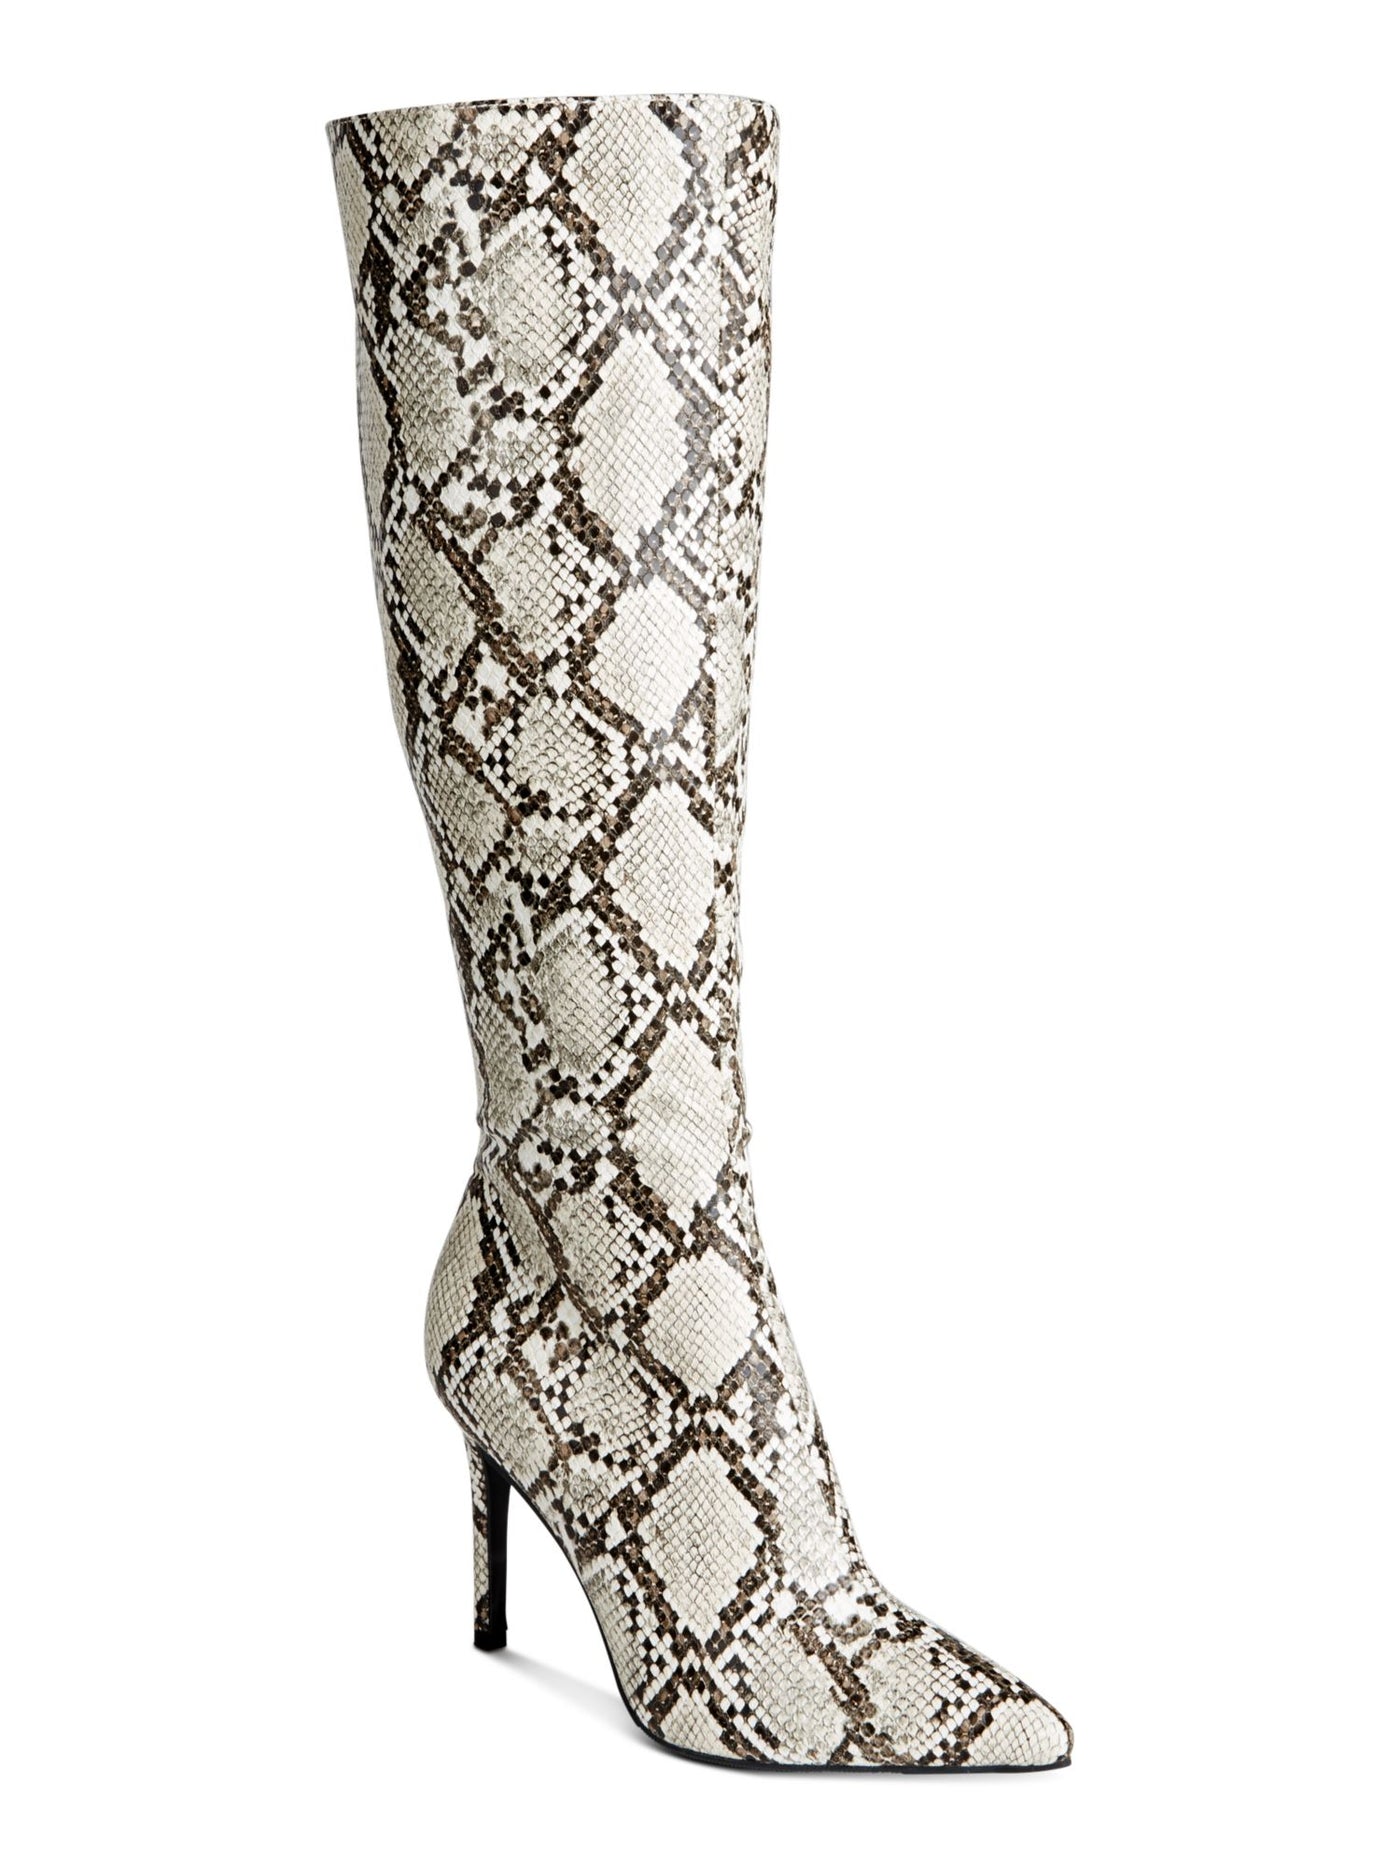 THALIA SODI Womens Brown Snake Print Cushioned Rajel Pointed Toe Stiletto Zip-Up Dress Boots 5.5